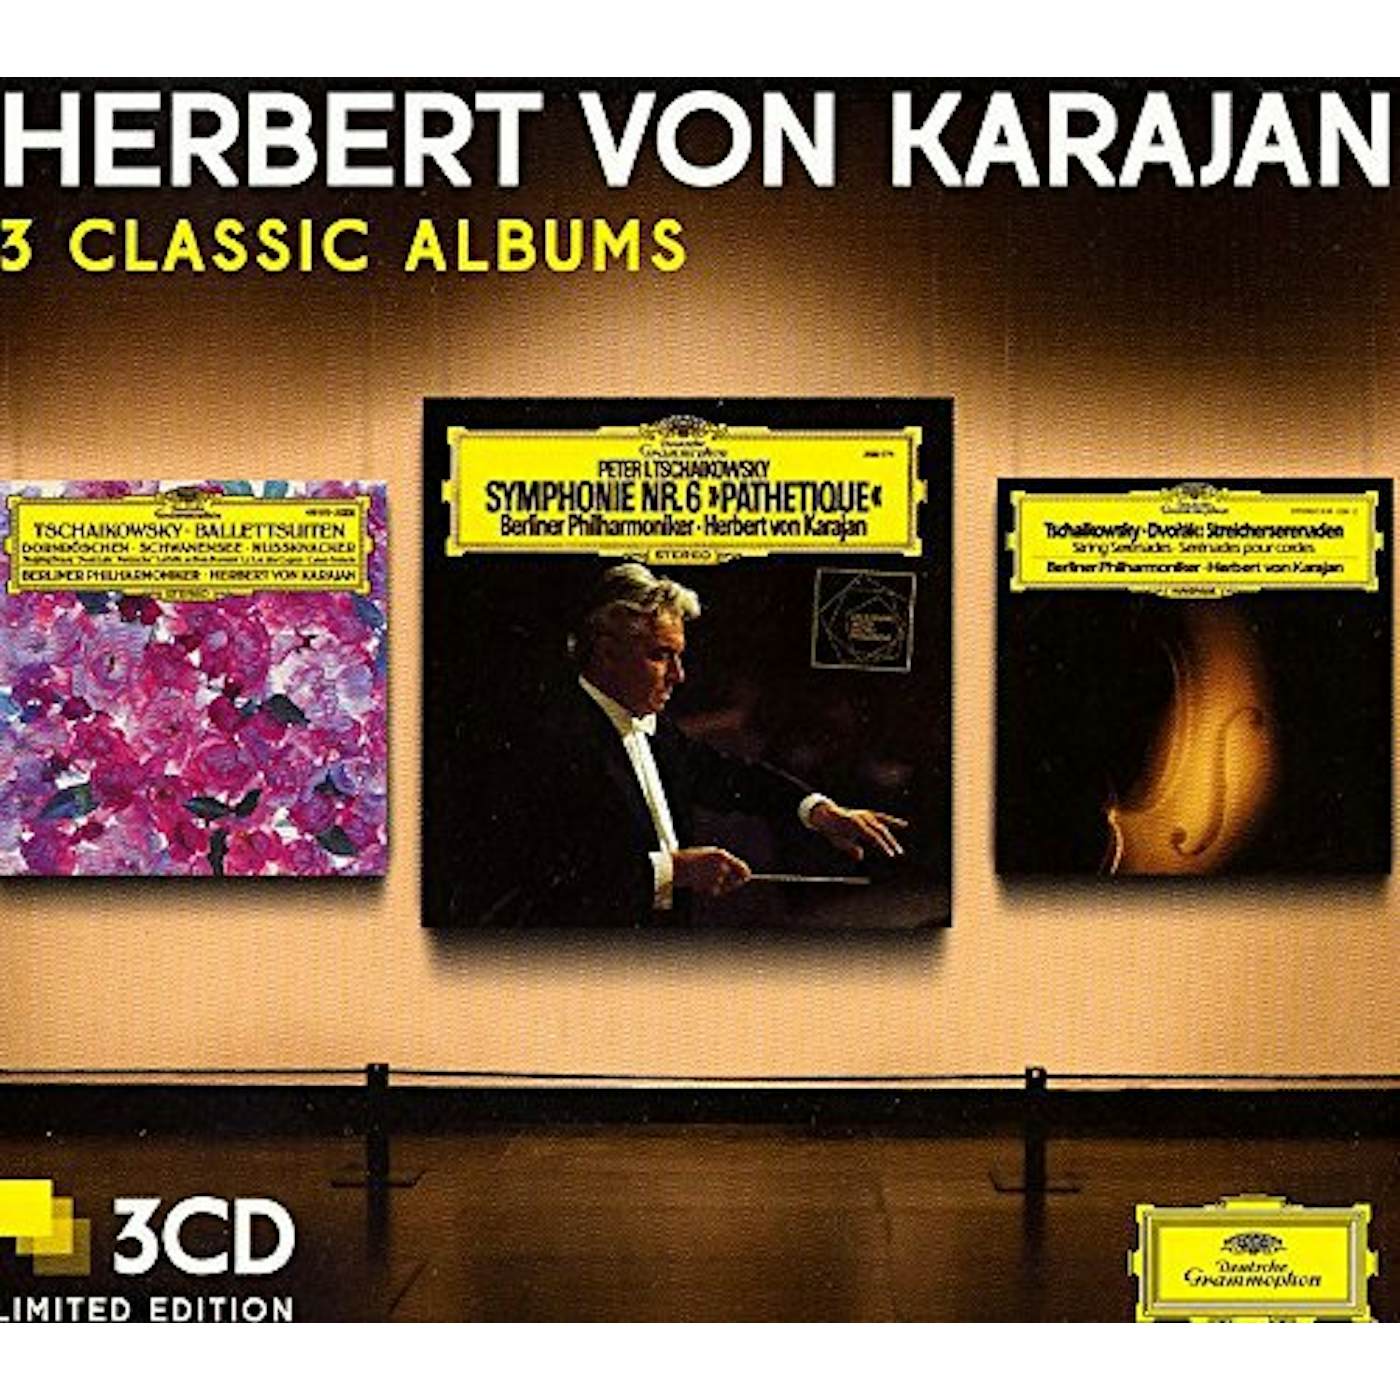 Herbert von Karajan THREE CLASSIC ALBUMS (TCHAIKOVSKY) CD